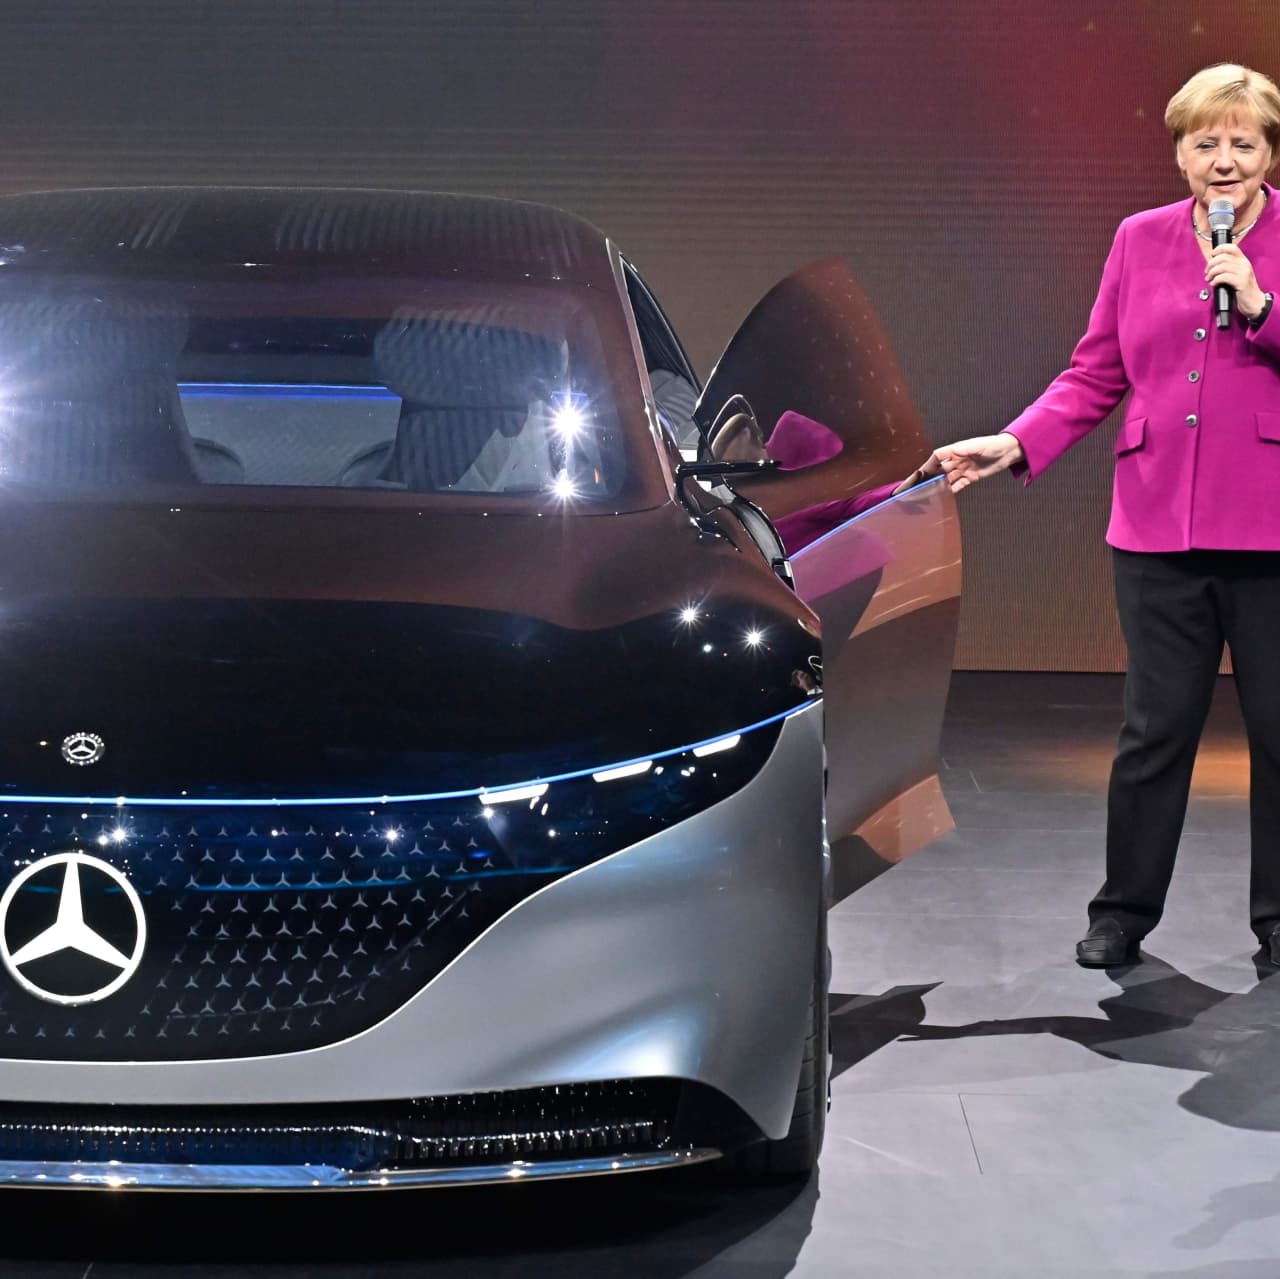 Mercedes electric car